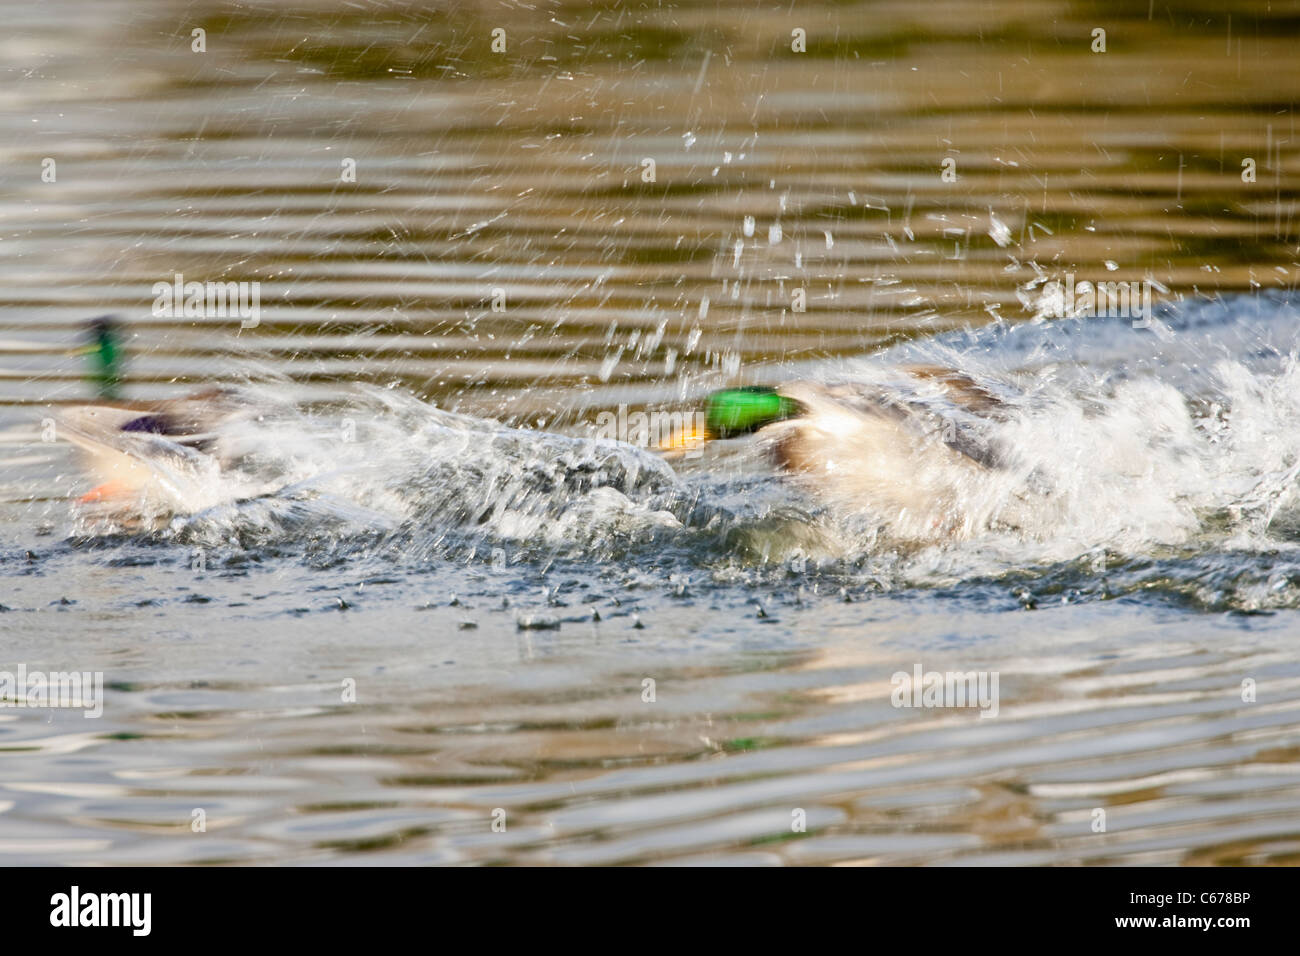 Two Male Mallard Ducks, Anas platyrhynchos, fighting in the water Stock Photo